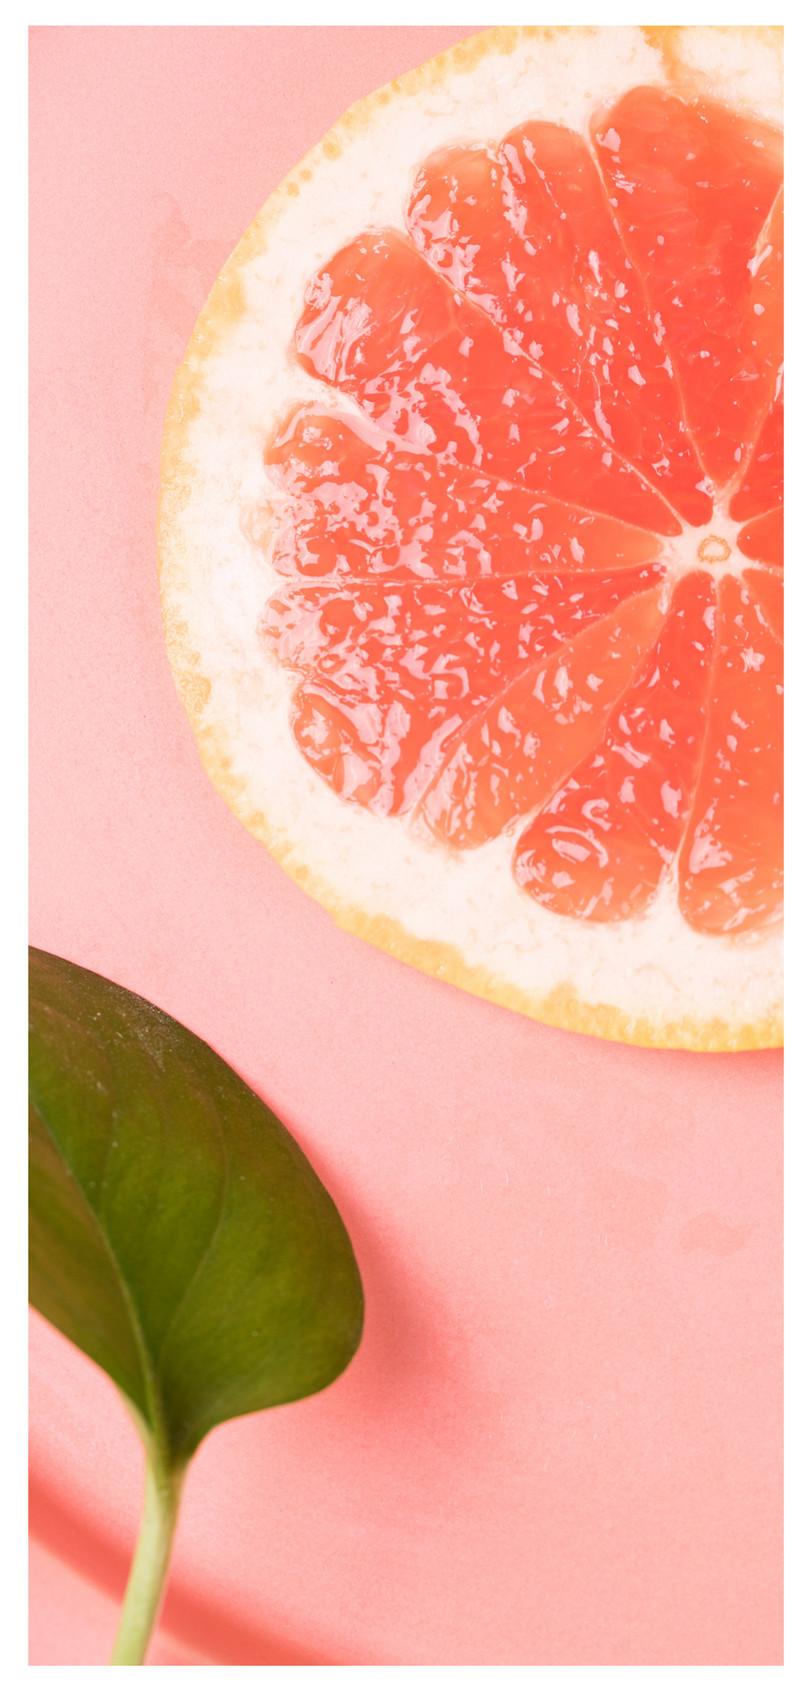 Fruit grapefruit mobile phone wallpaper background image_picture